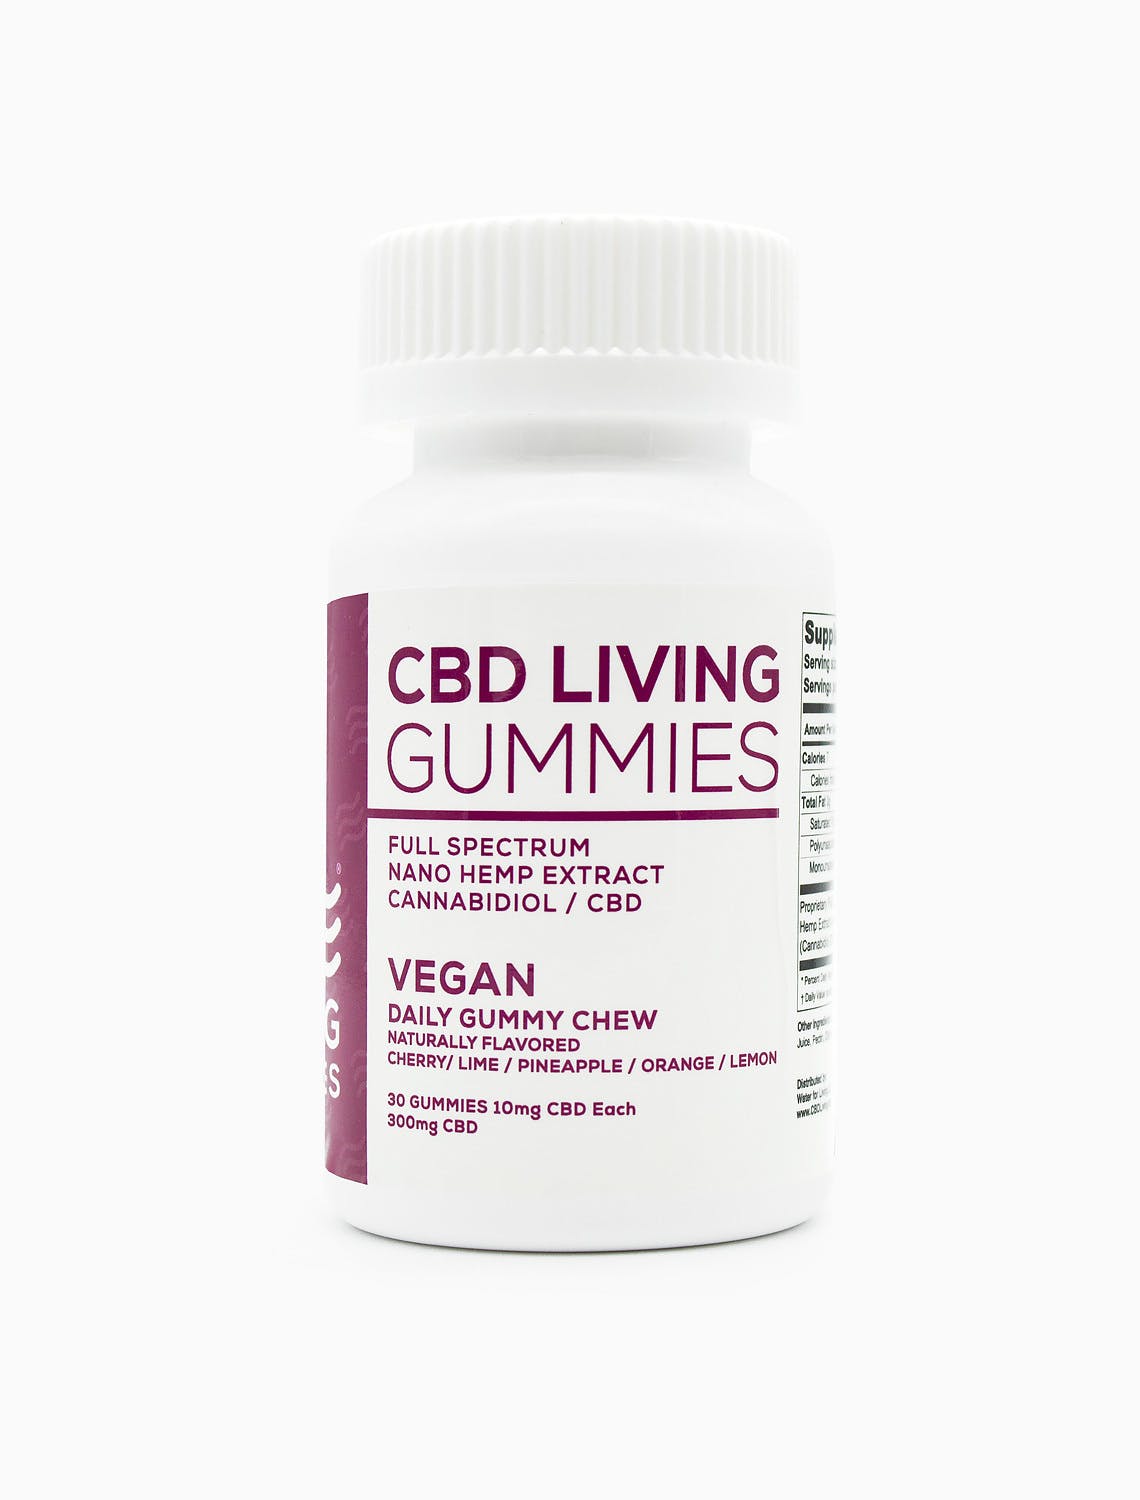 marijuana-dispensaries-cbd-werx-in-san-clemente-cbd-living-vegan-gummies-300mg